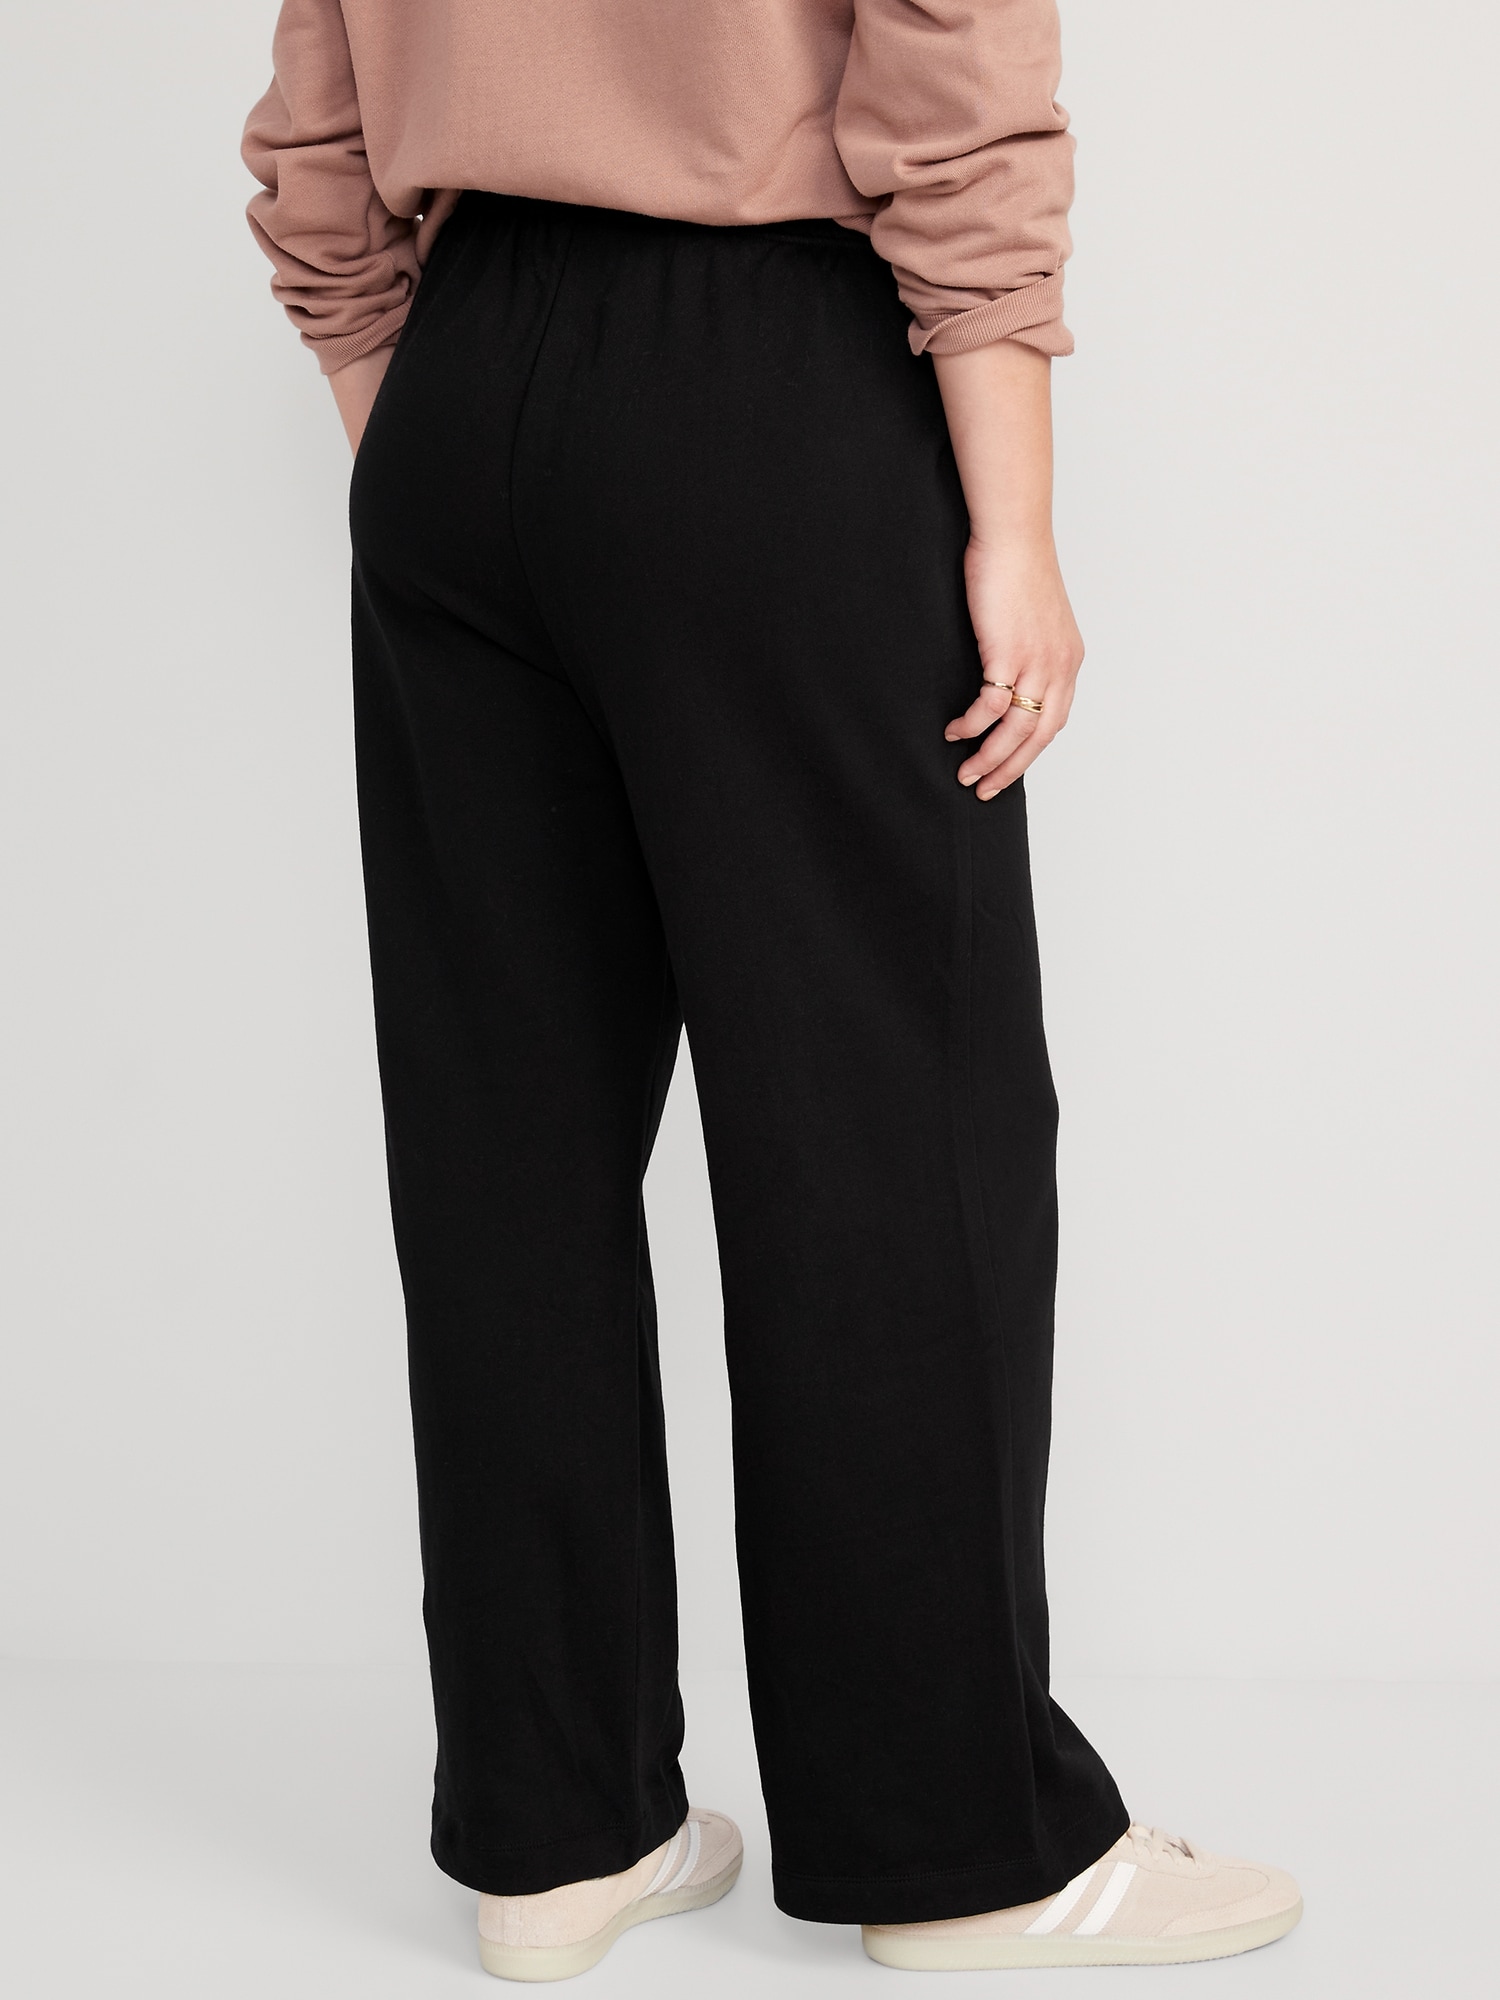 Buy the Womens Purple Heather Elastic Waist Slash Pocket Sweatpants Size 2XL